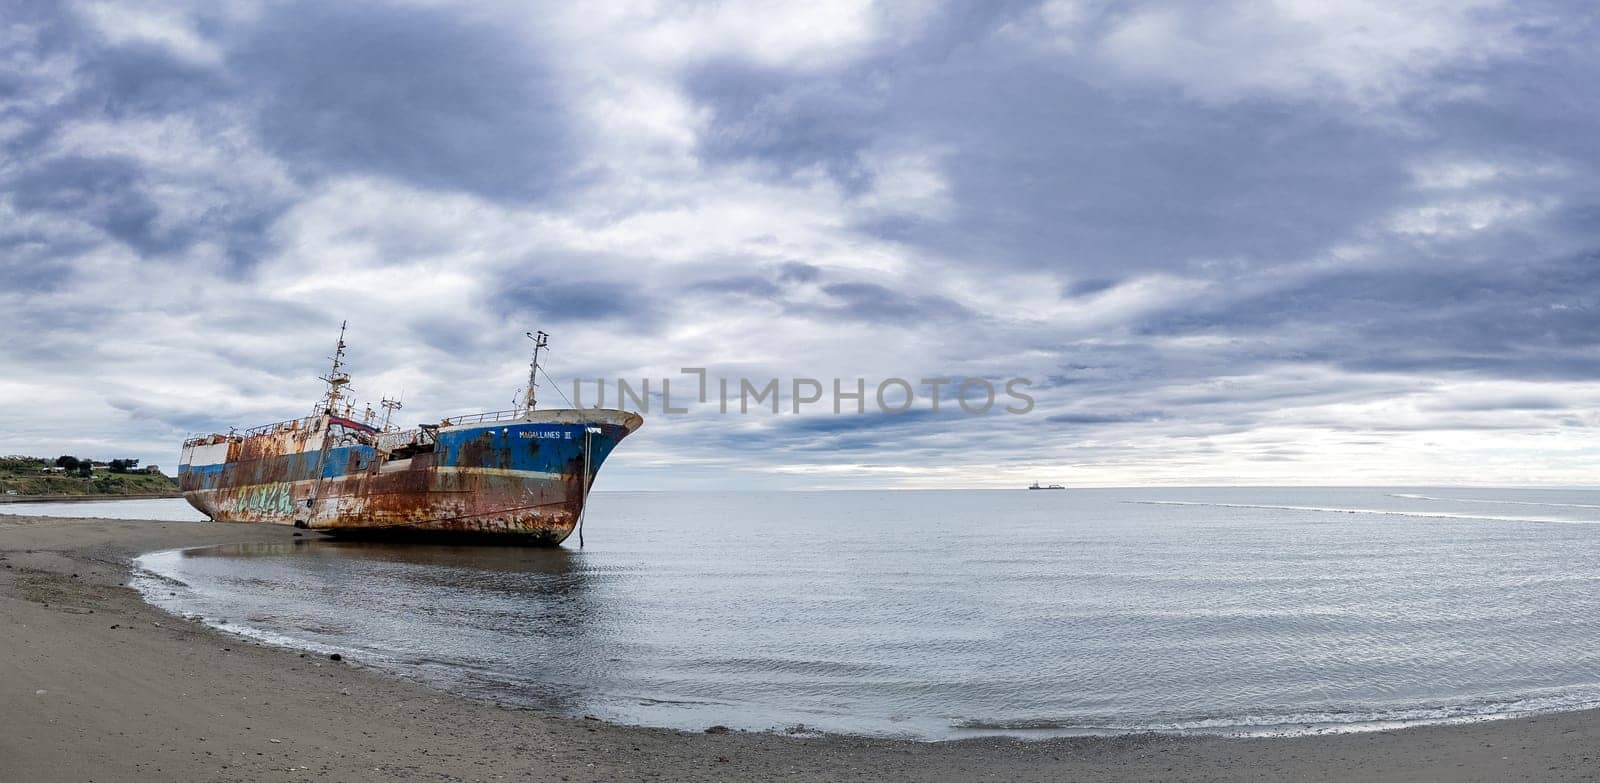 Rusted Shipwreck on Serene Beach Under Cloudy Sky by FerradalFCG